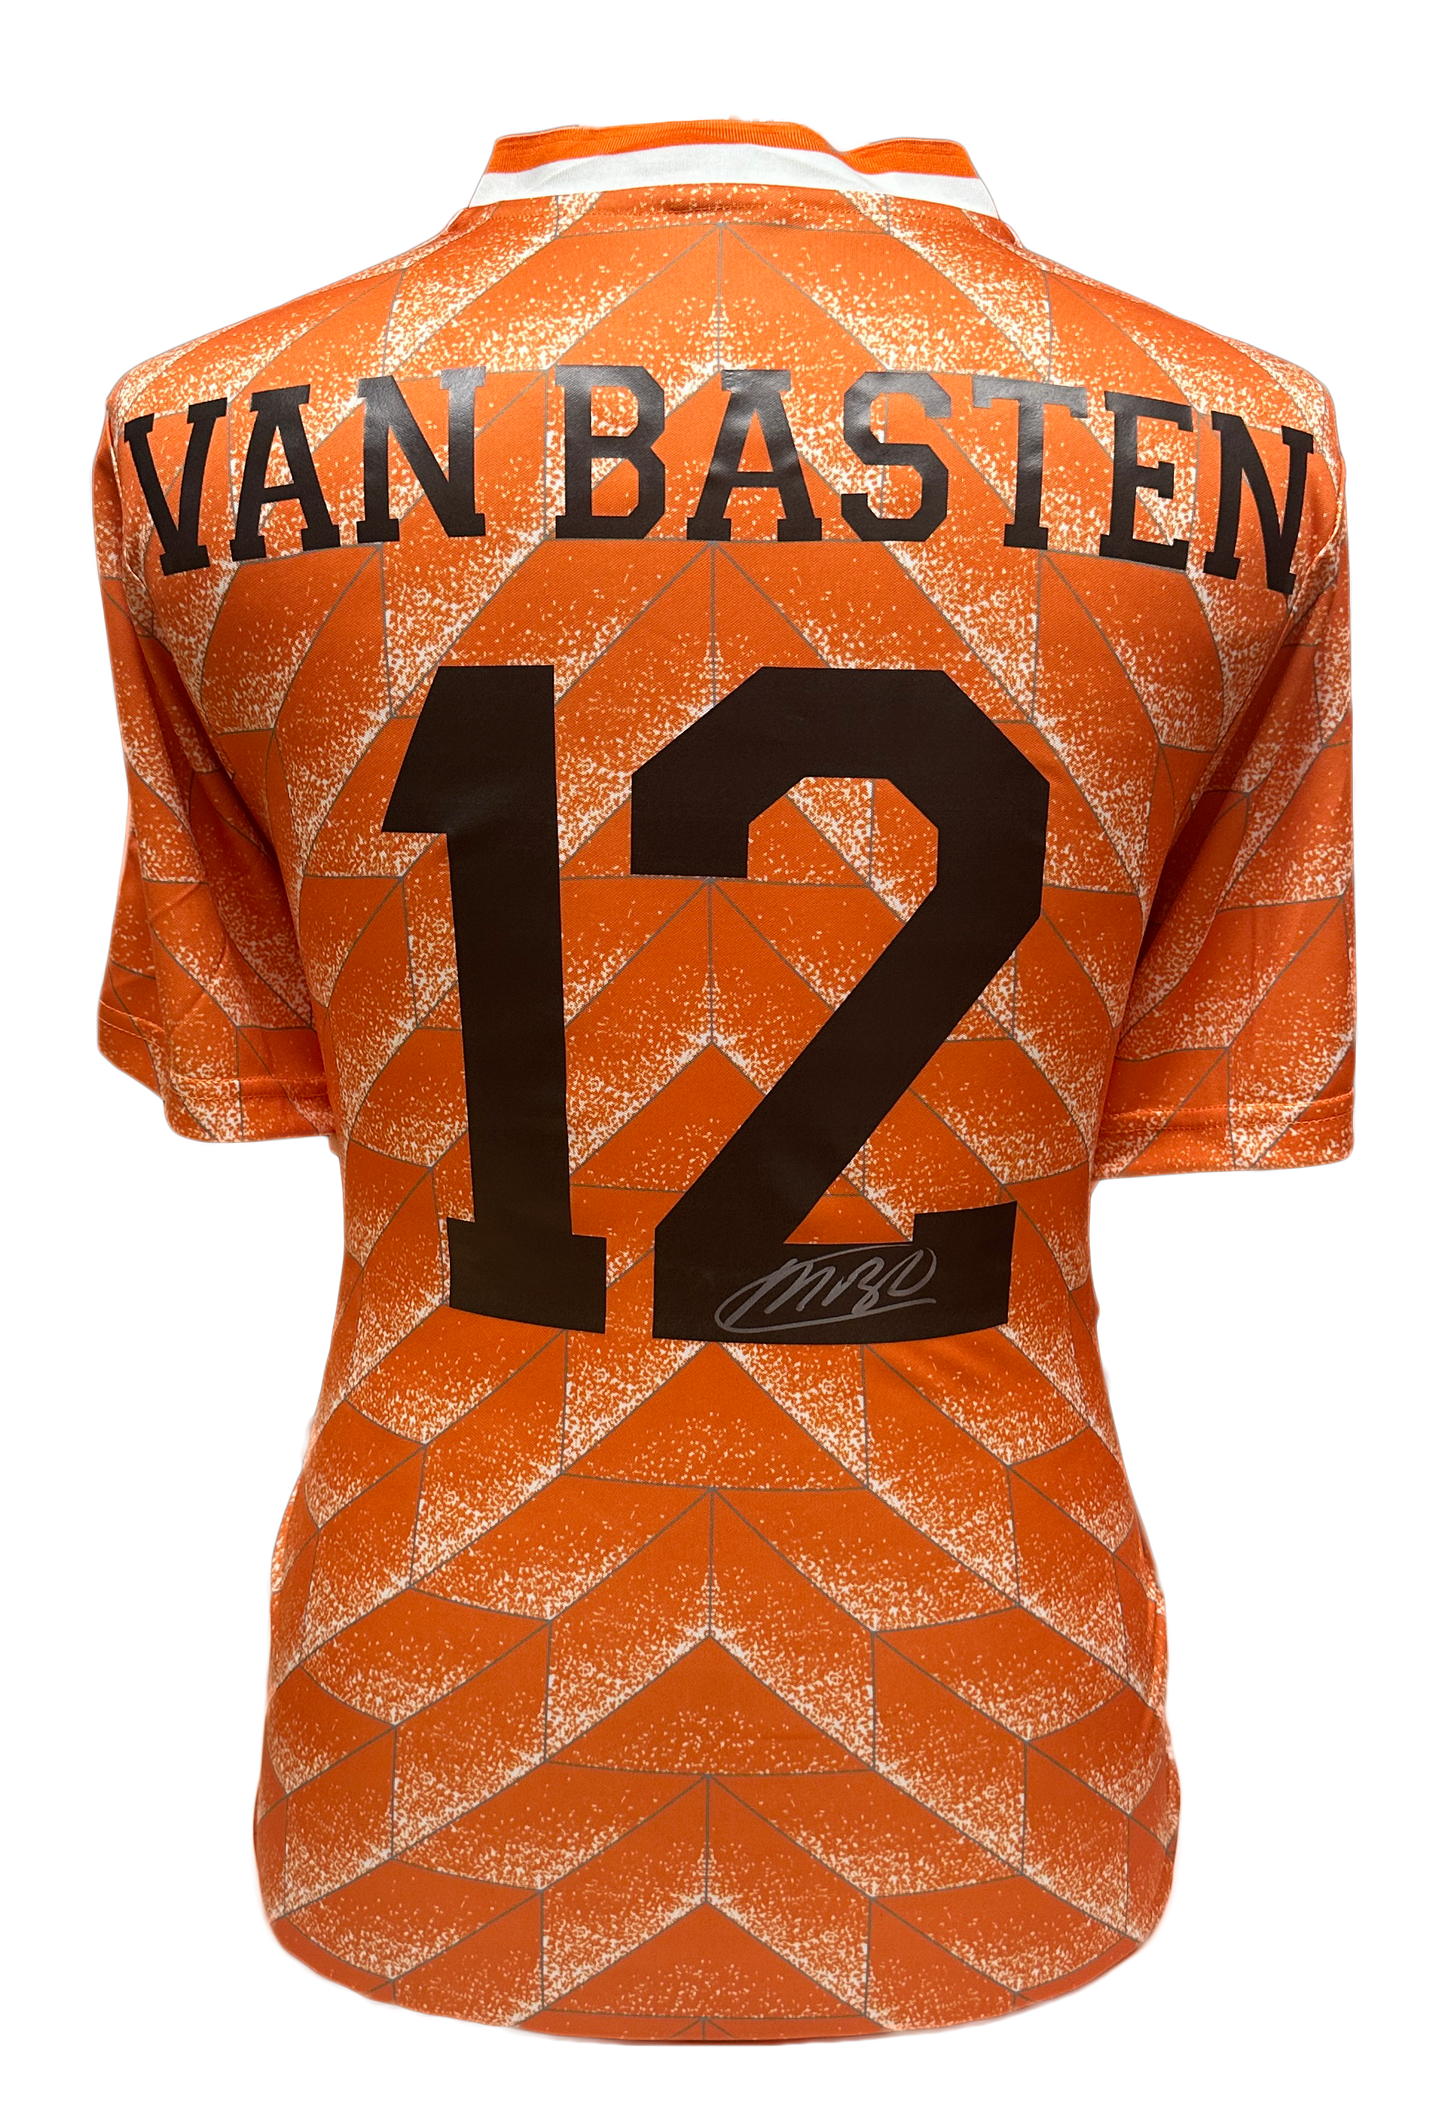 Marco Van Basten Holland Signed Shirt